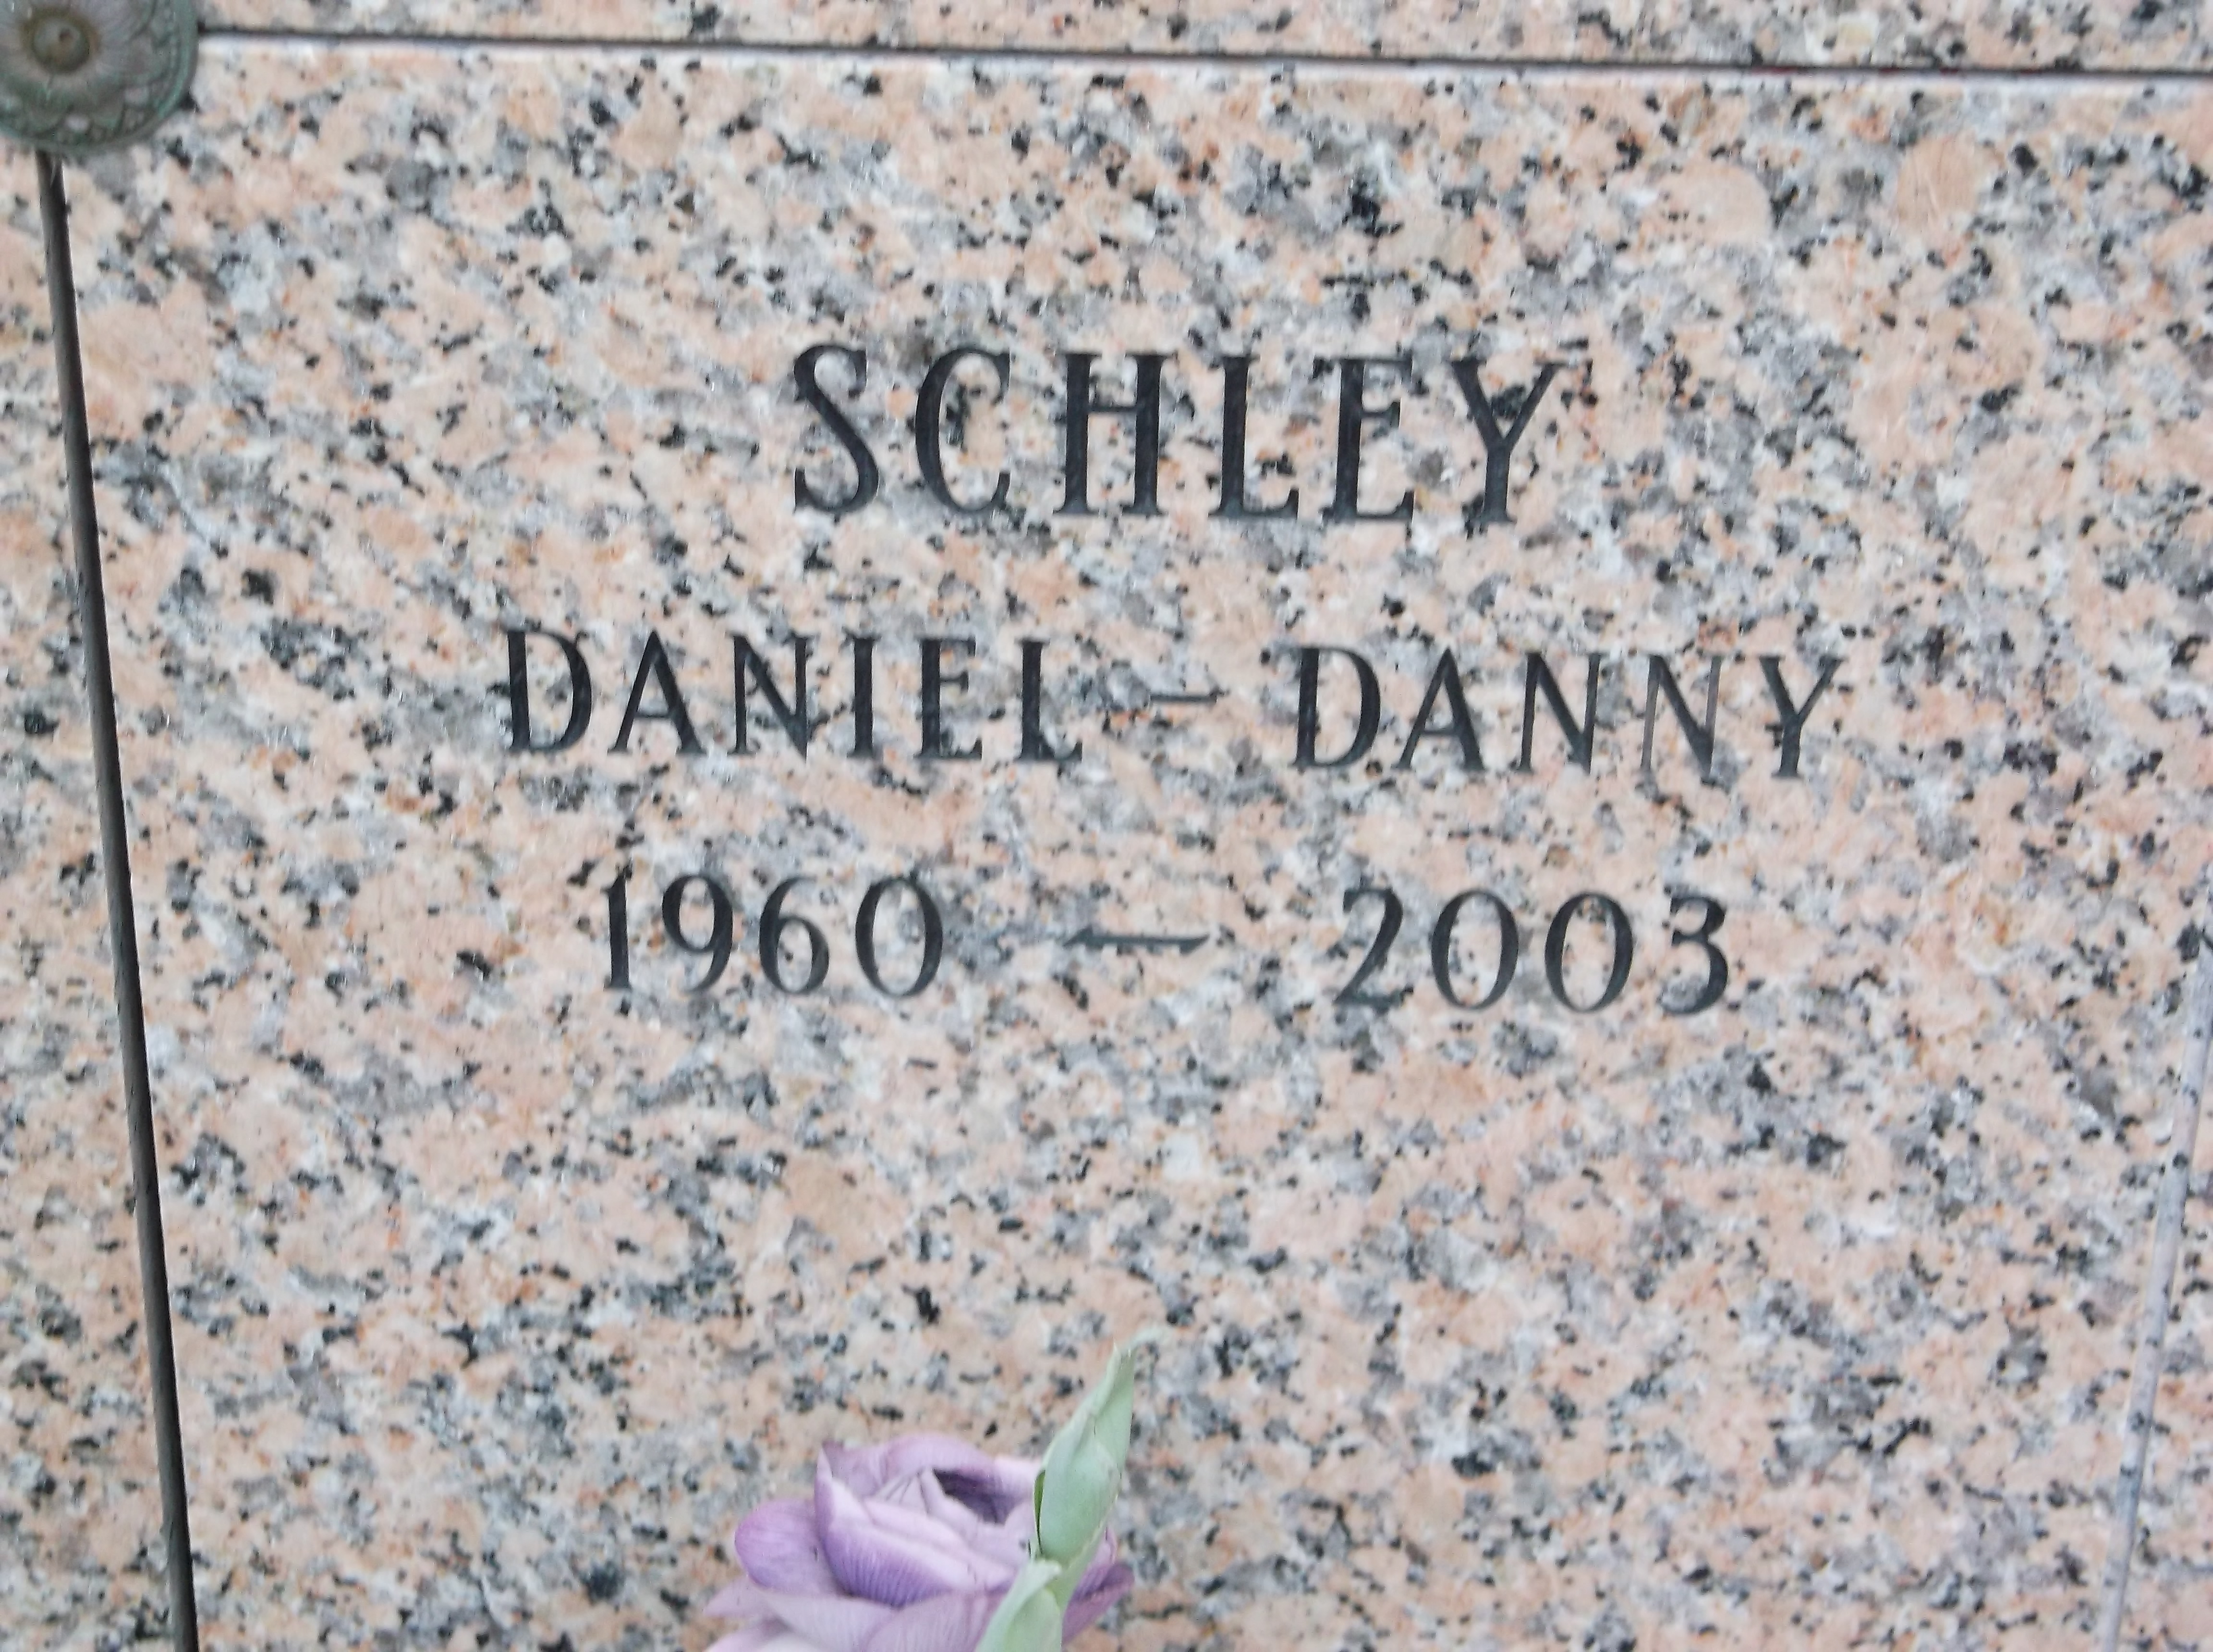 Daniel-Danny Schley